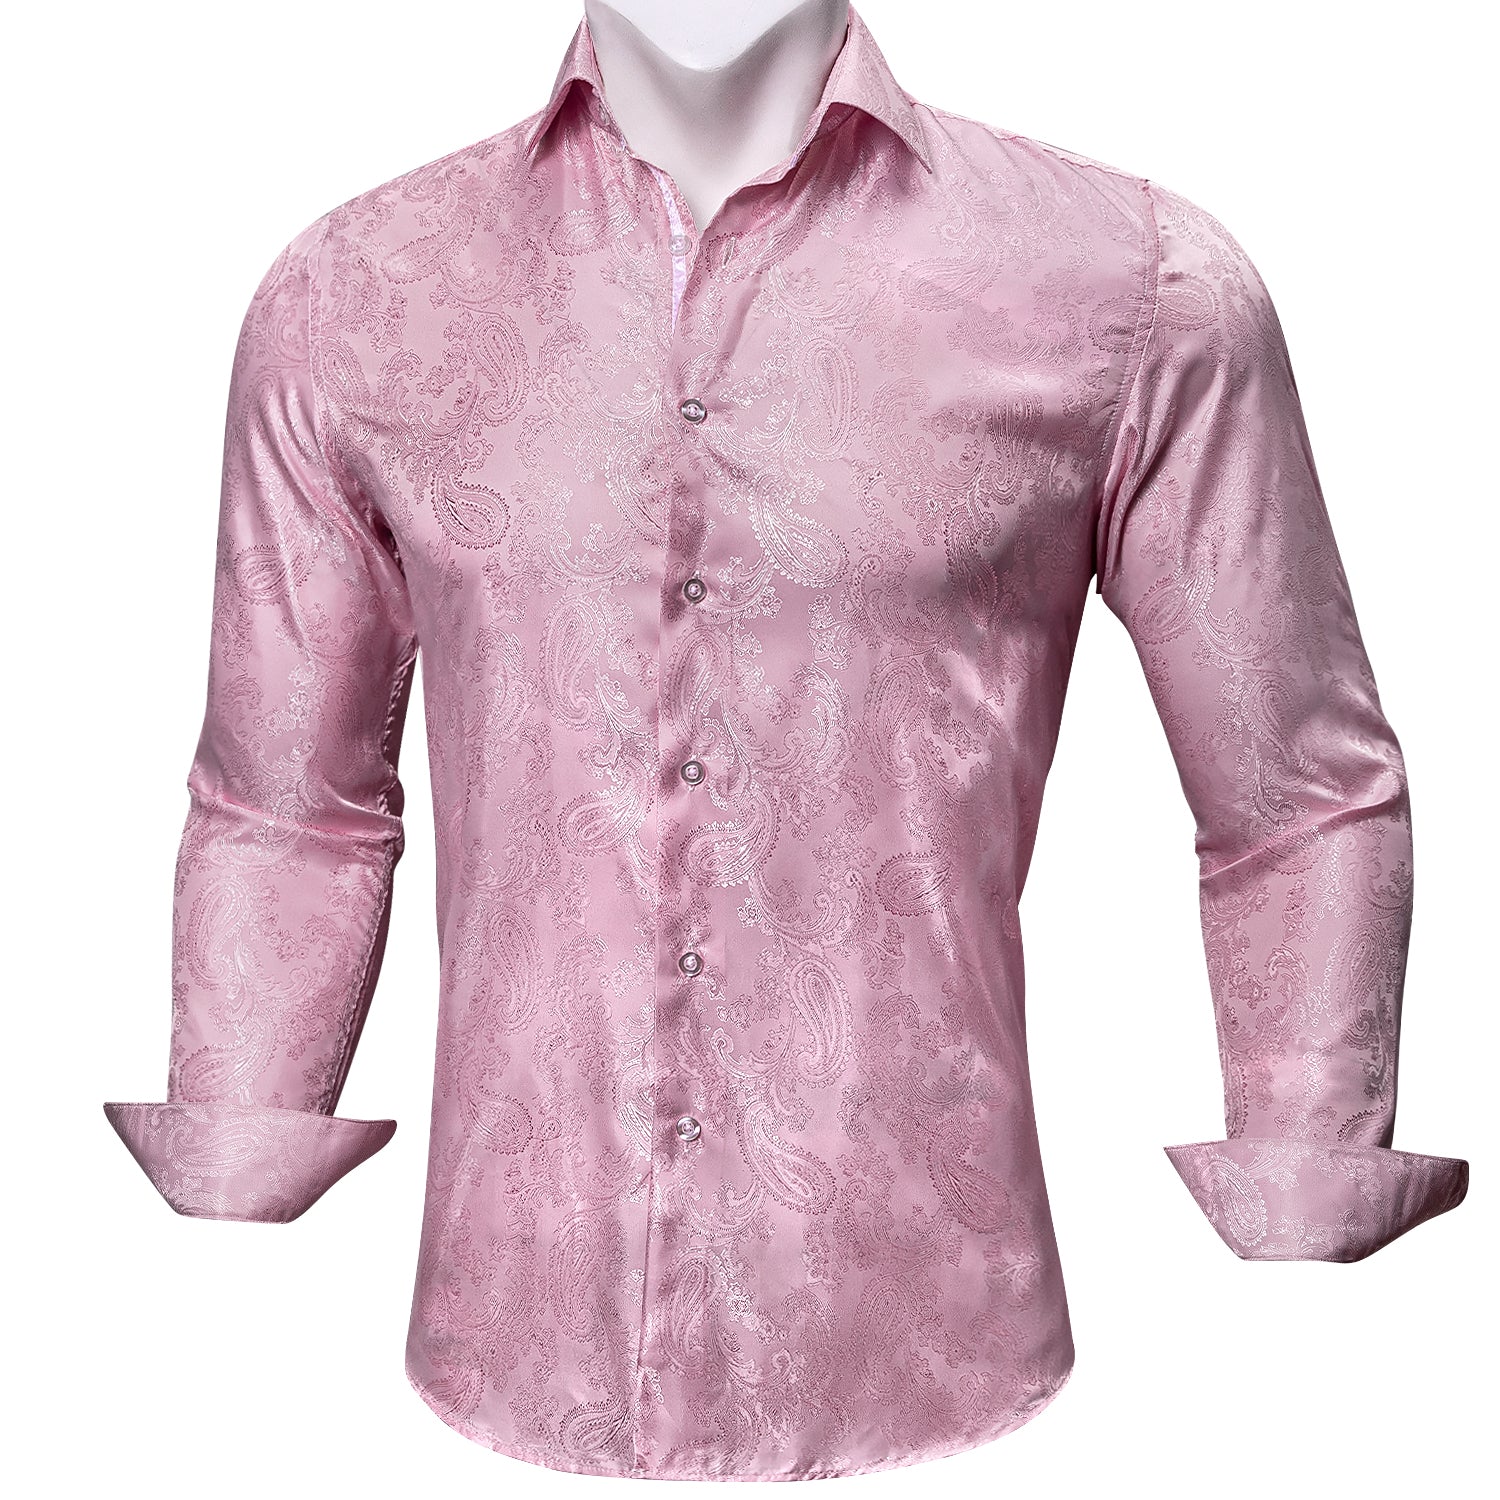 Barry.wang Button Down Shirt Pink Paisley Men's Long Sleeves Silk Shirt Fashion